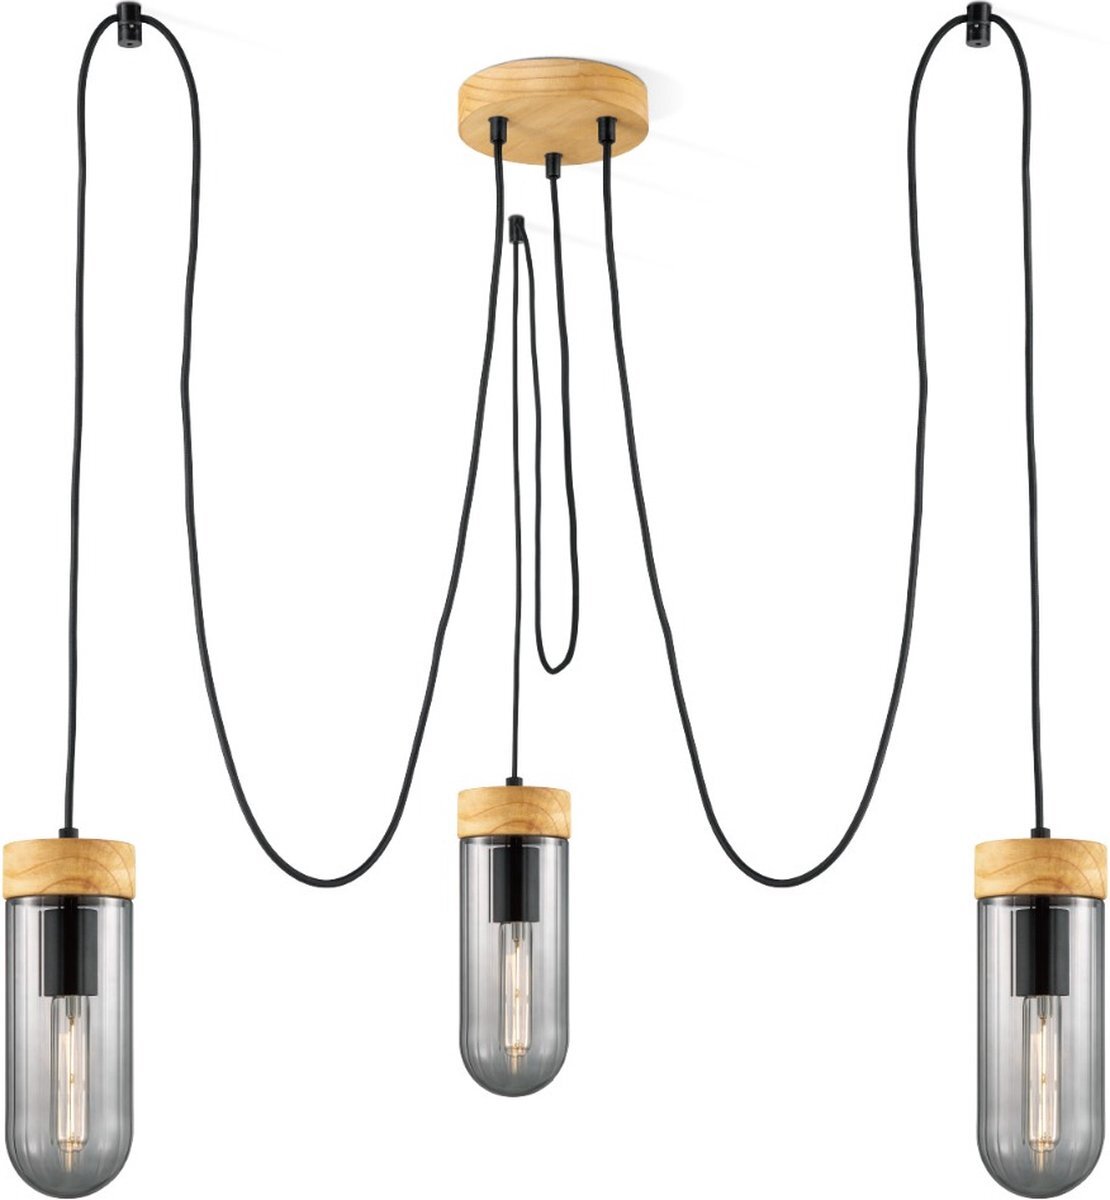 Home Sweet Home Hanglamp - Capri 3L - landelijk - industrieel - trendy spinlamp - E27 fitting - hout/smoke glas